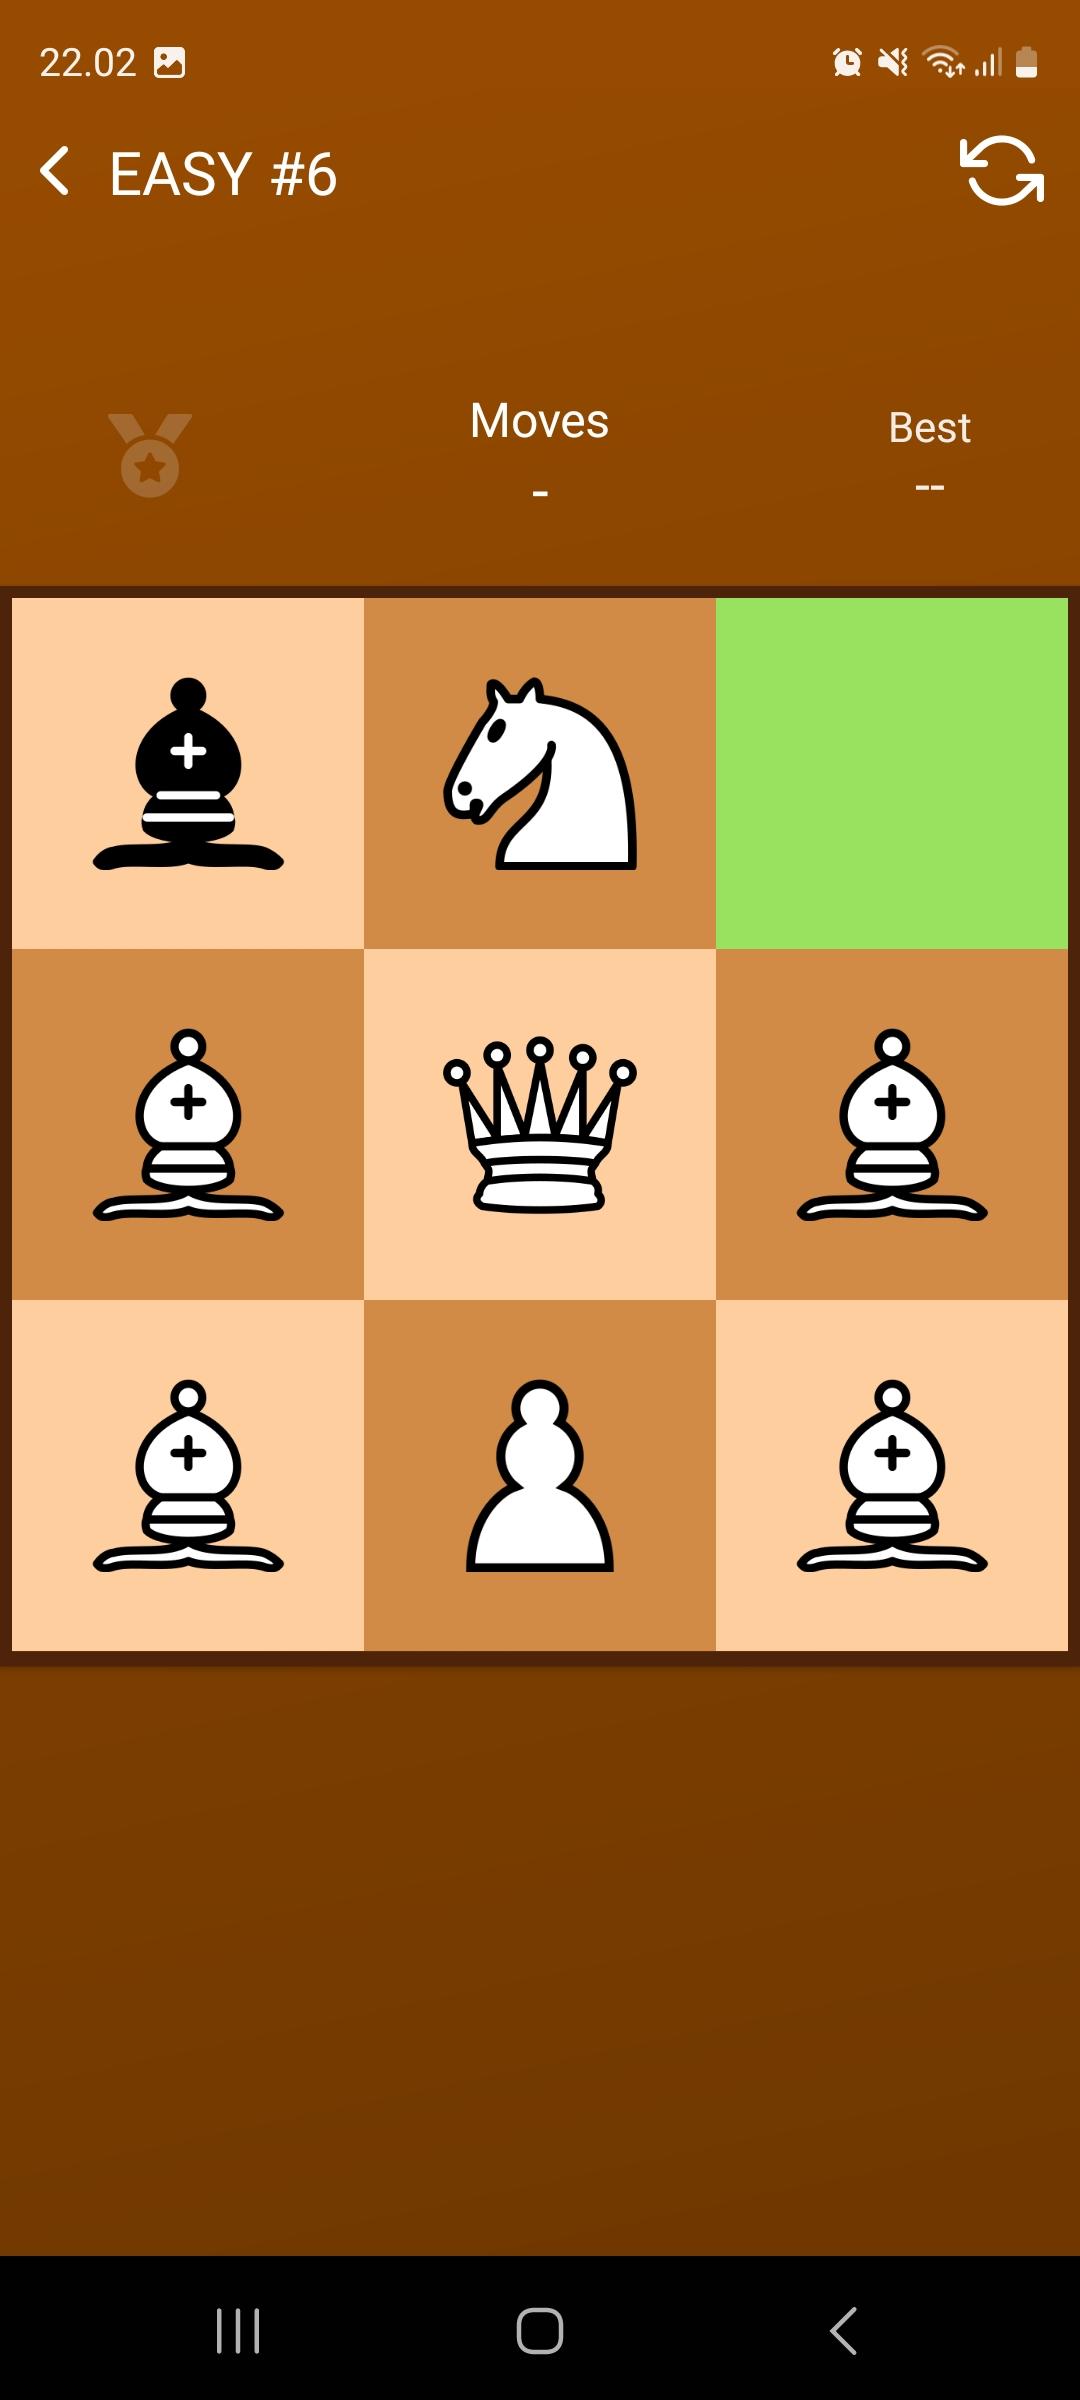 ChessJam - Download